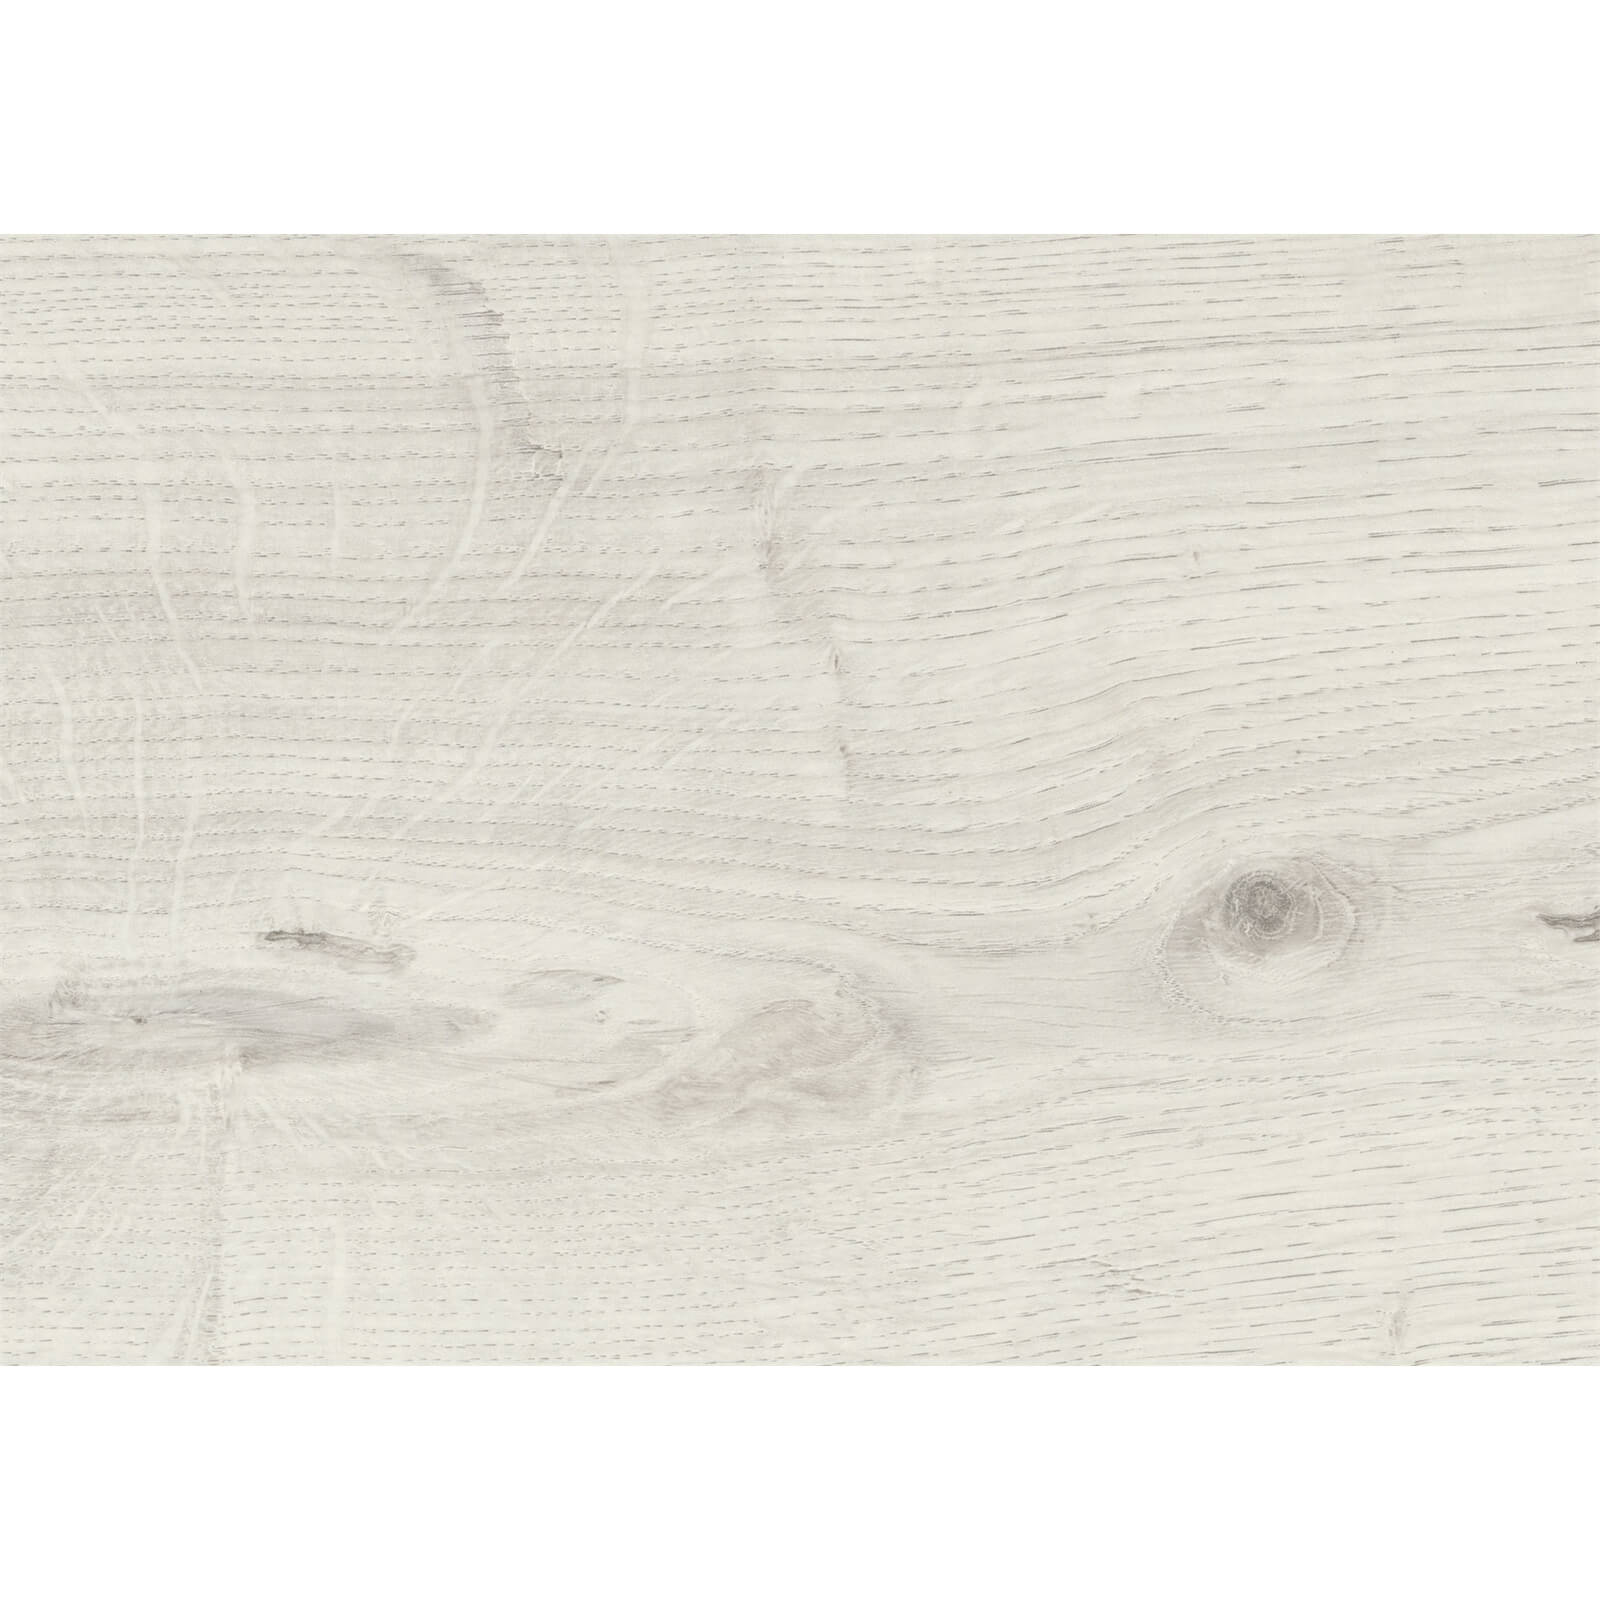 Chantilly Oak Laminate Flooring Sample Board